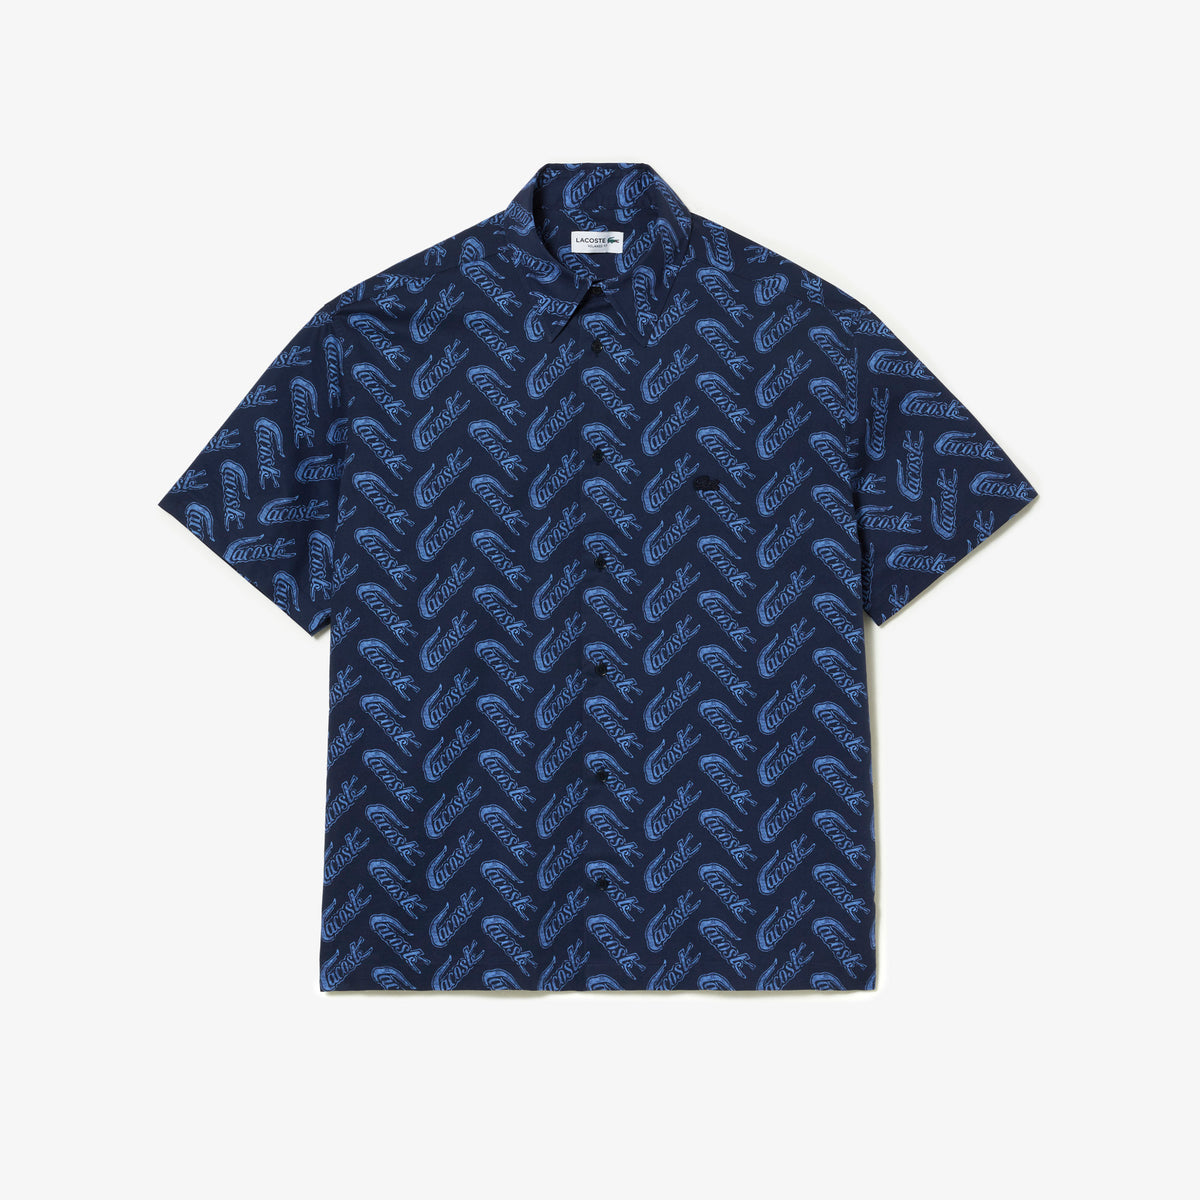 Lacoste -  Short Sleeve Vintage Print Shirt - Navy Blue/Blue